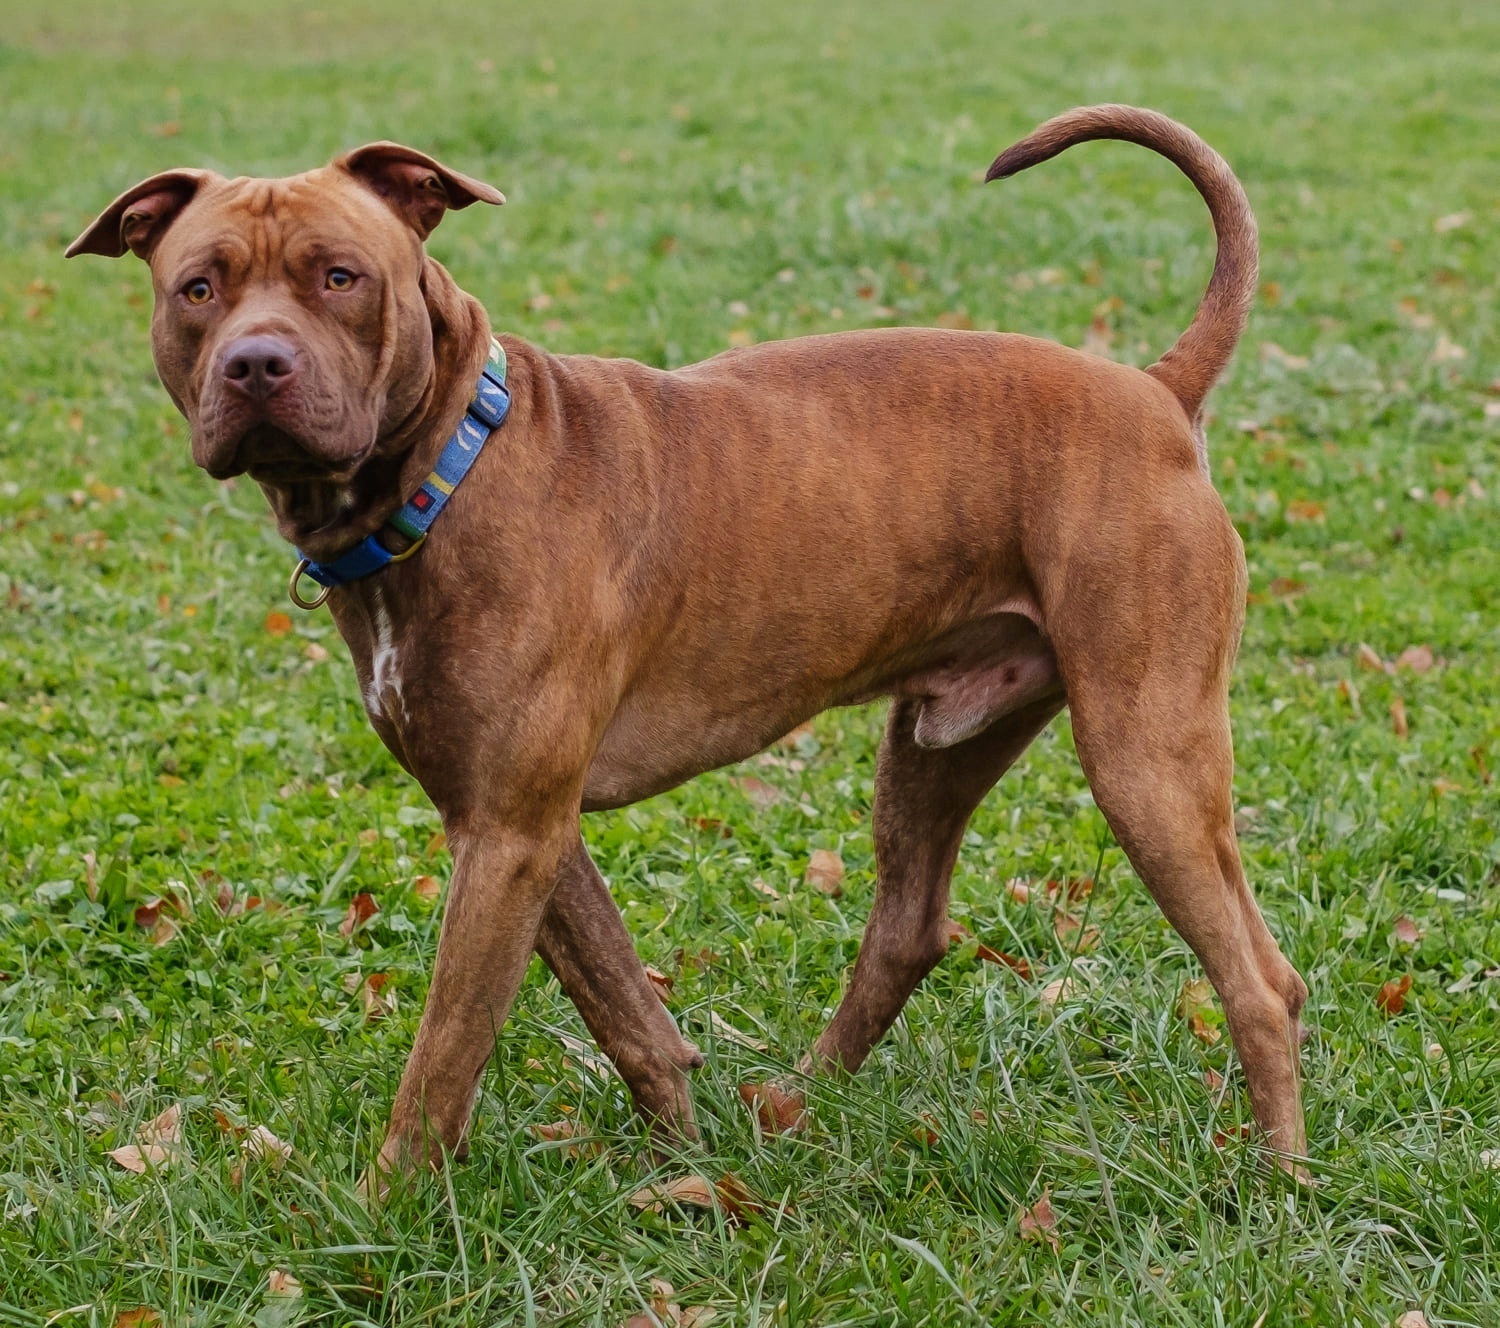 NOAH, an adoptable Pit Bull Terrier in Auburn, NY, 13021 | Photo Image 2